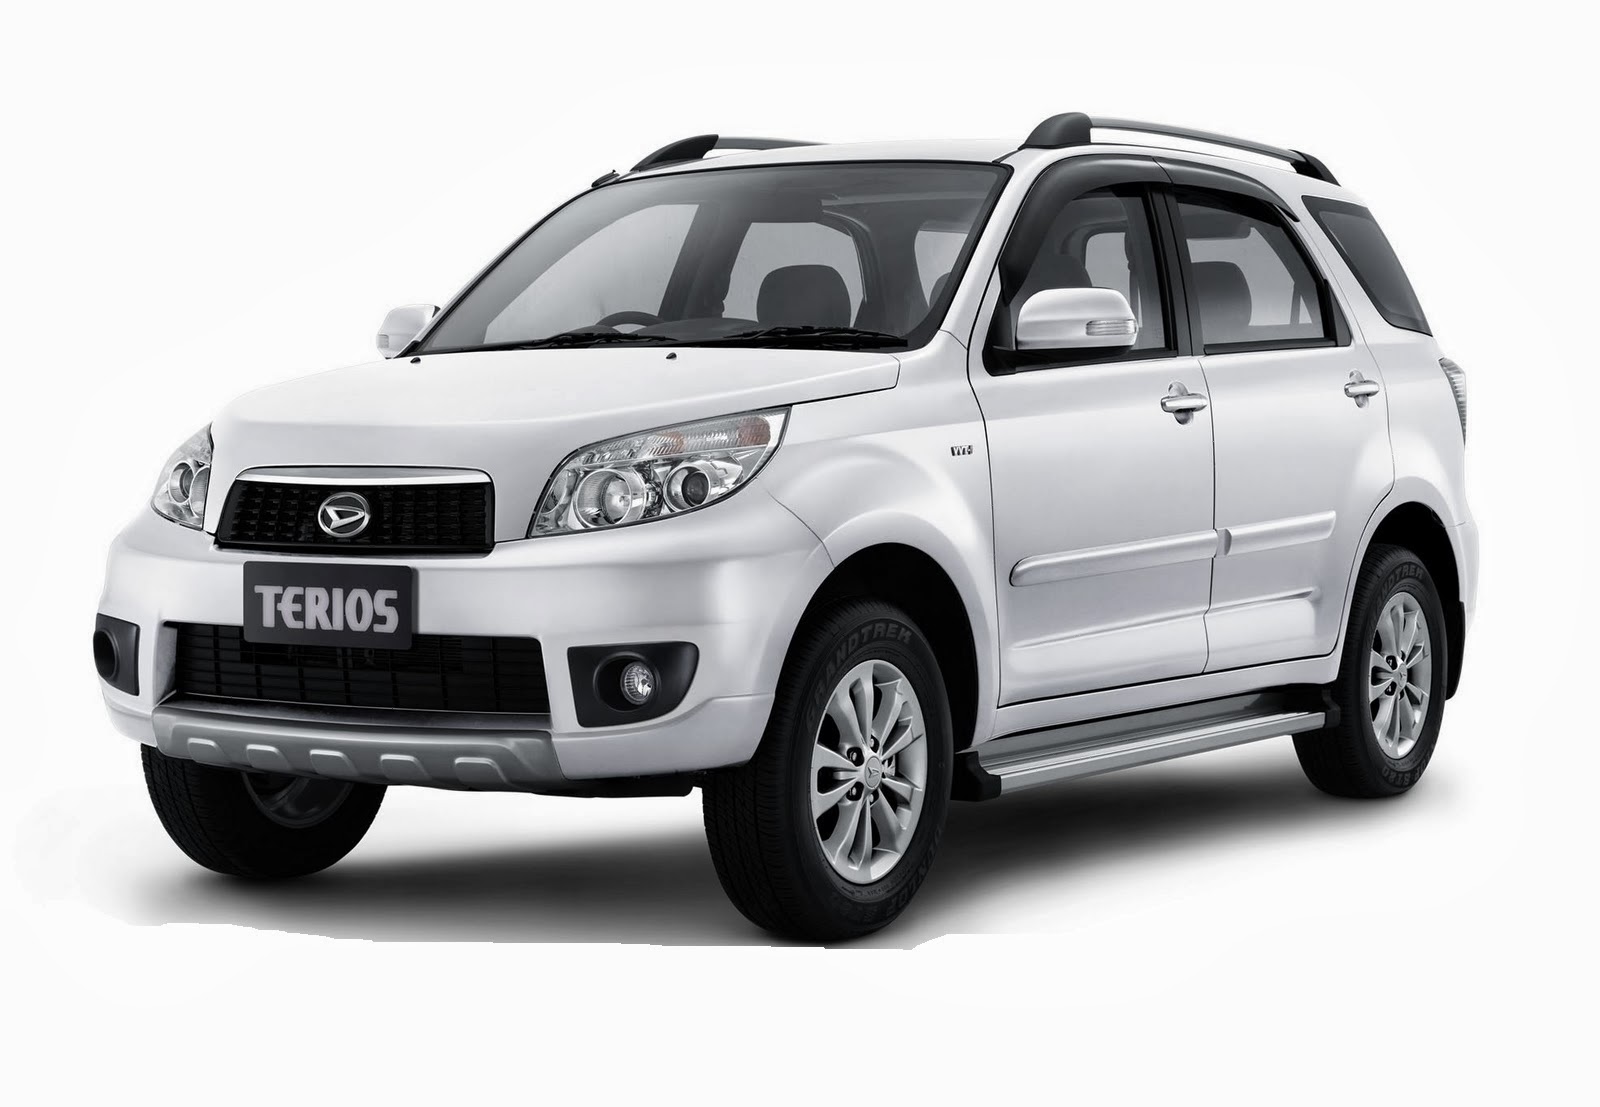 Harga Mobil Daihatsu Semua Tipe Baru dan Bekas Terkini 2014 - Kumpulan